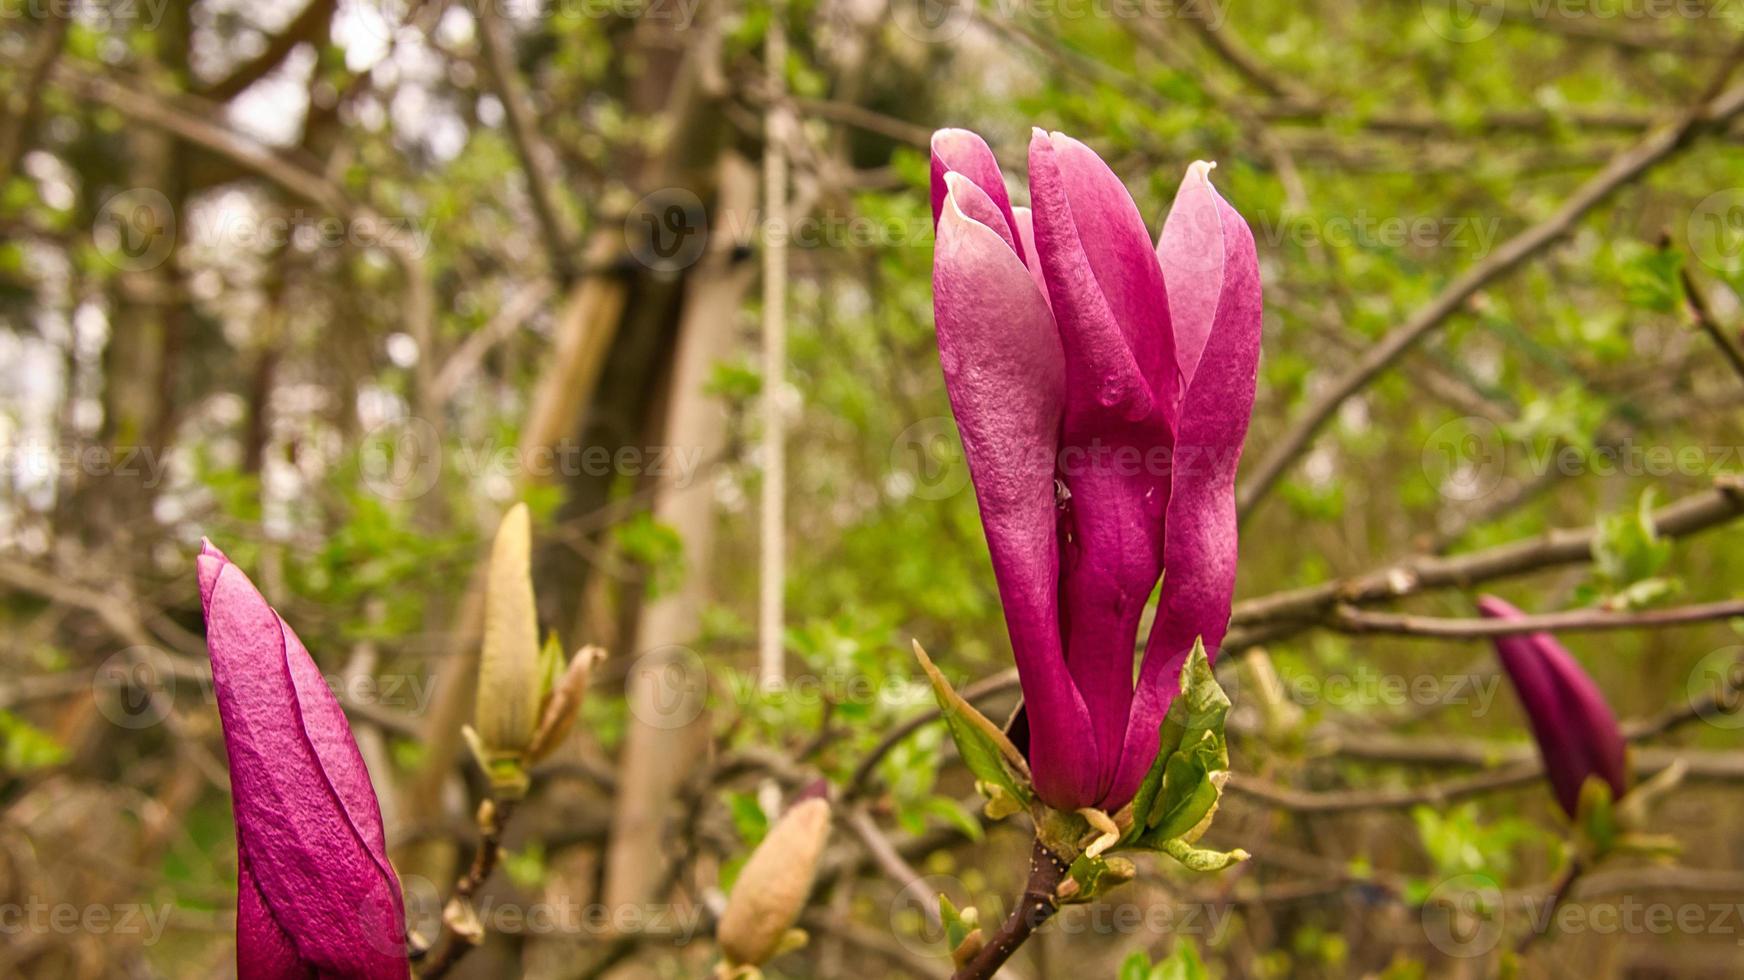 Magnolia trees are a true splendor in the flowering season. An eye catcher nature photo